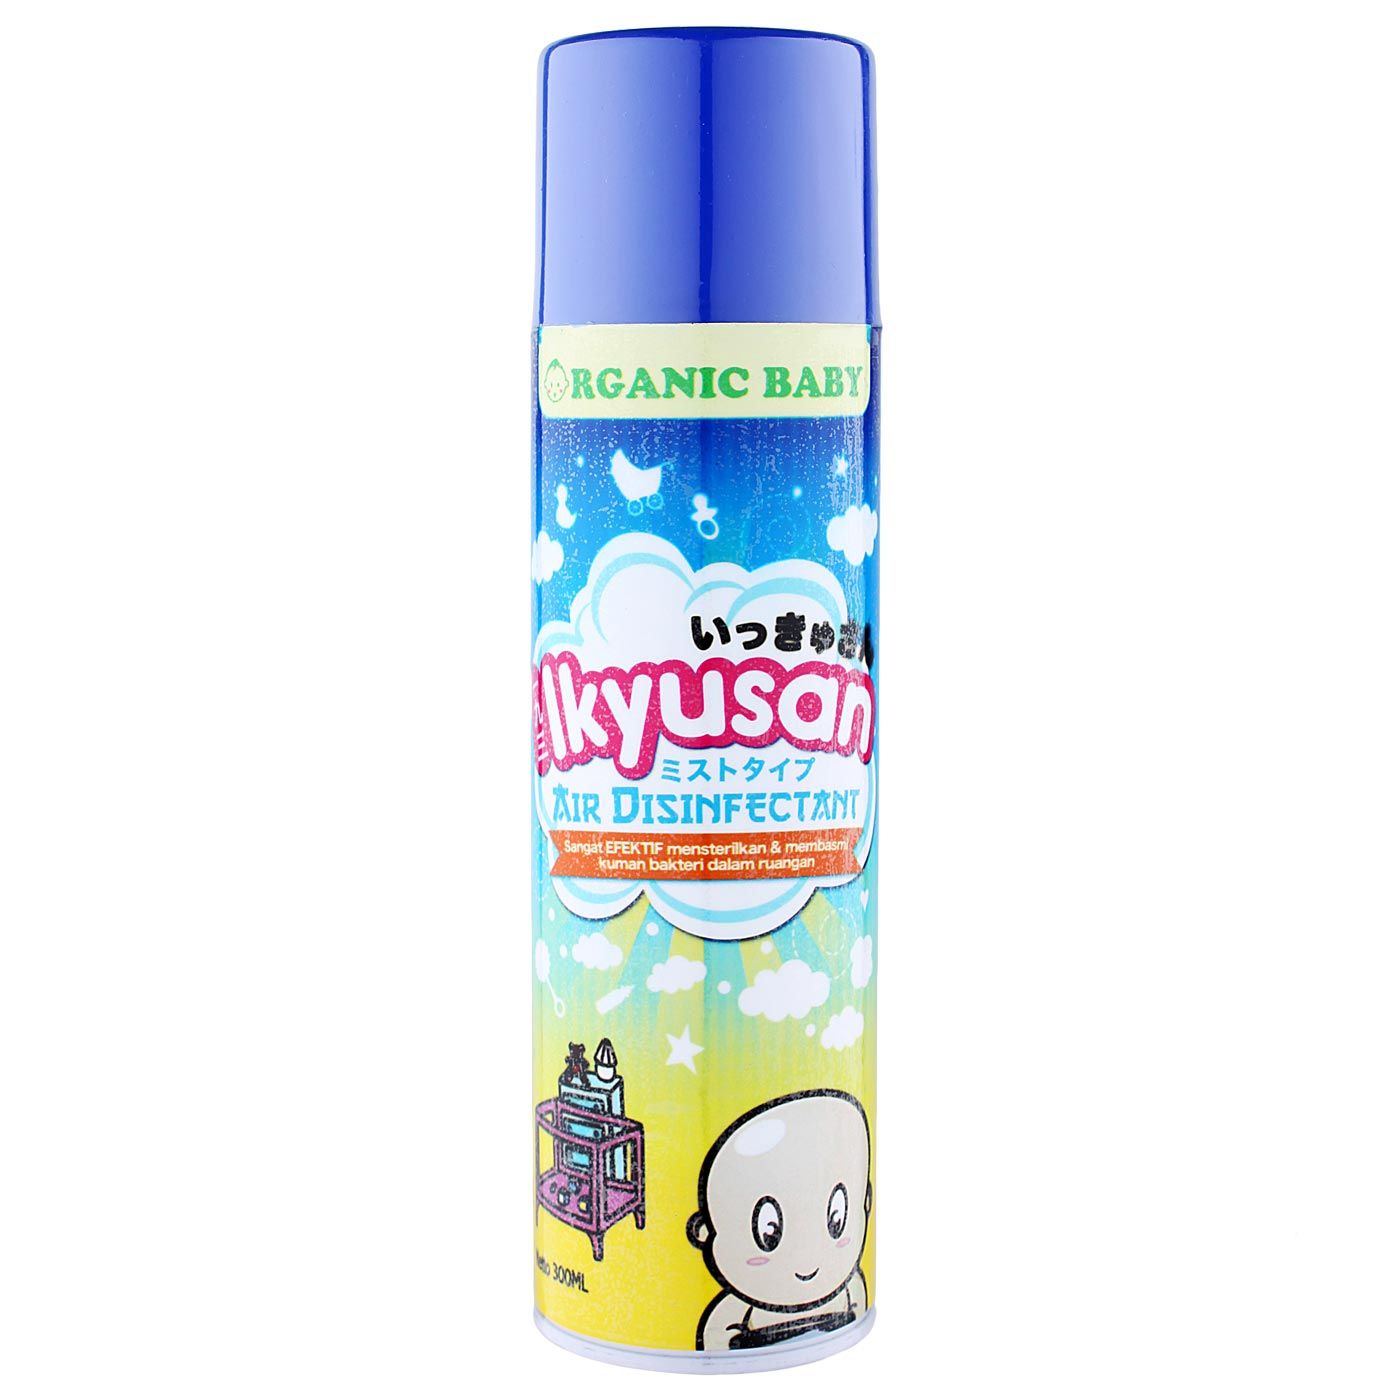 Ikyusan Organic Baby Air Disinfectant 300ml - 1